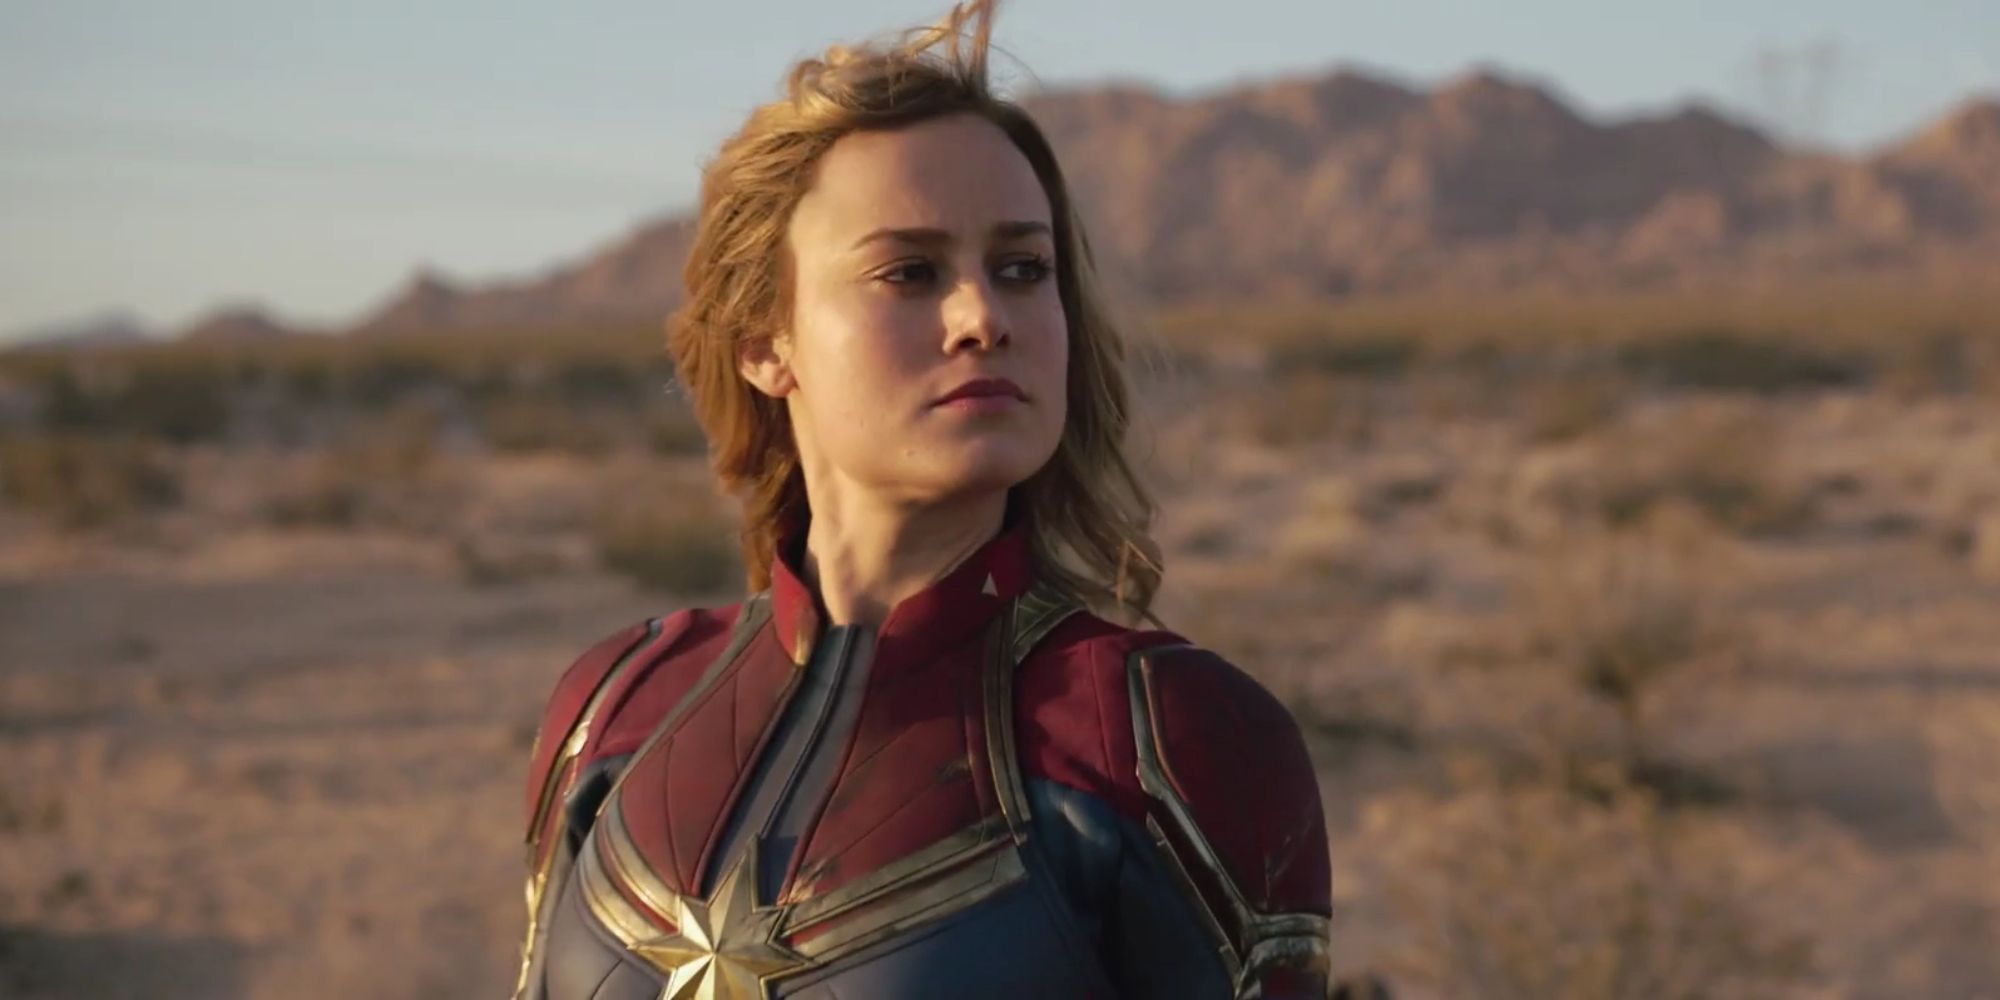 Brie Larson looking heroic in a desert in Captain Marvel